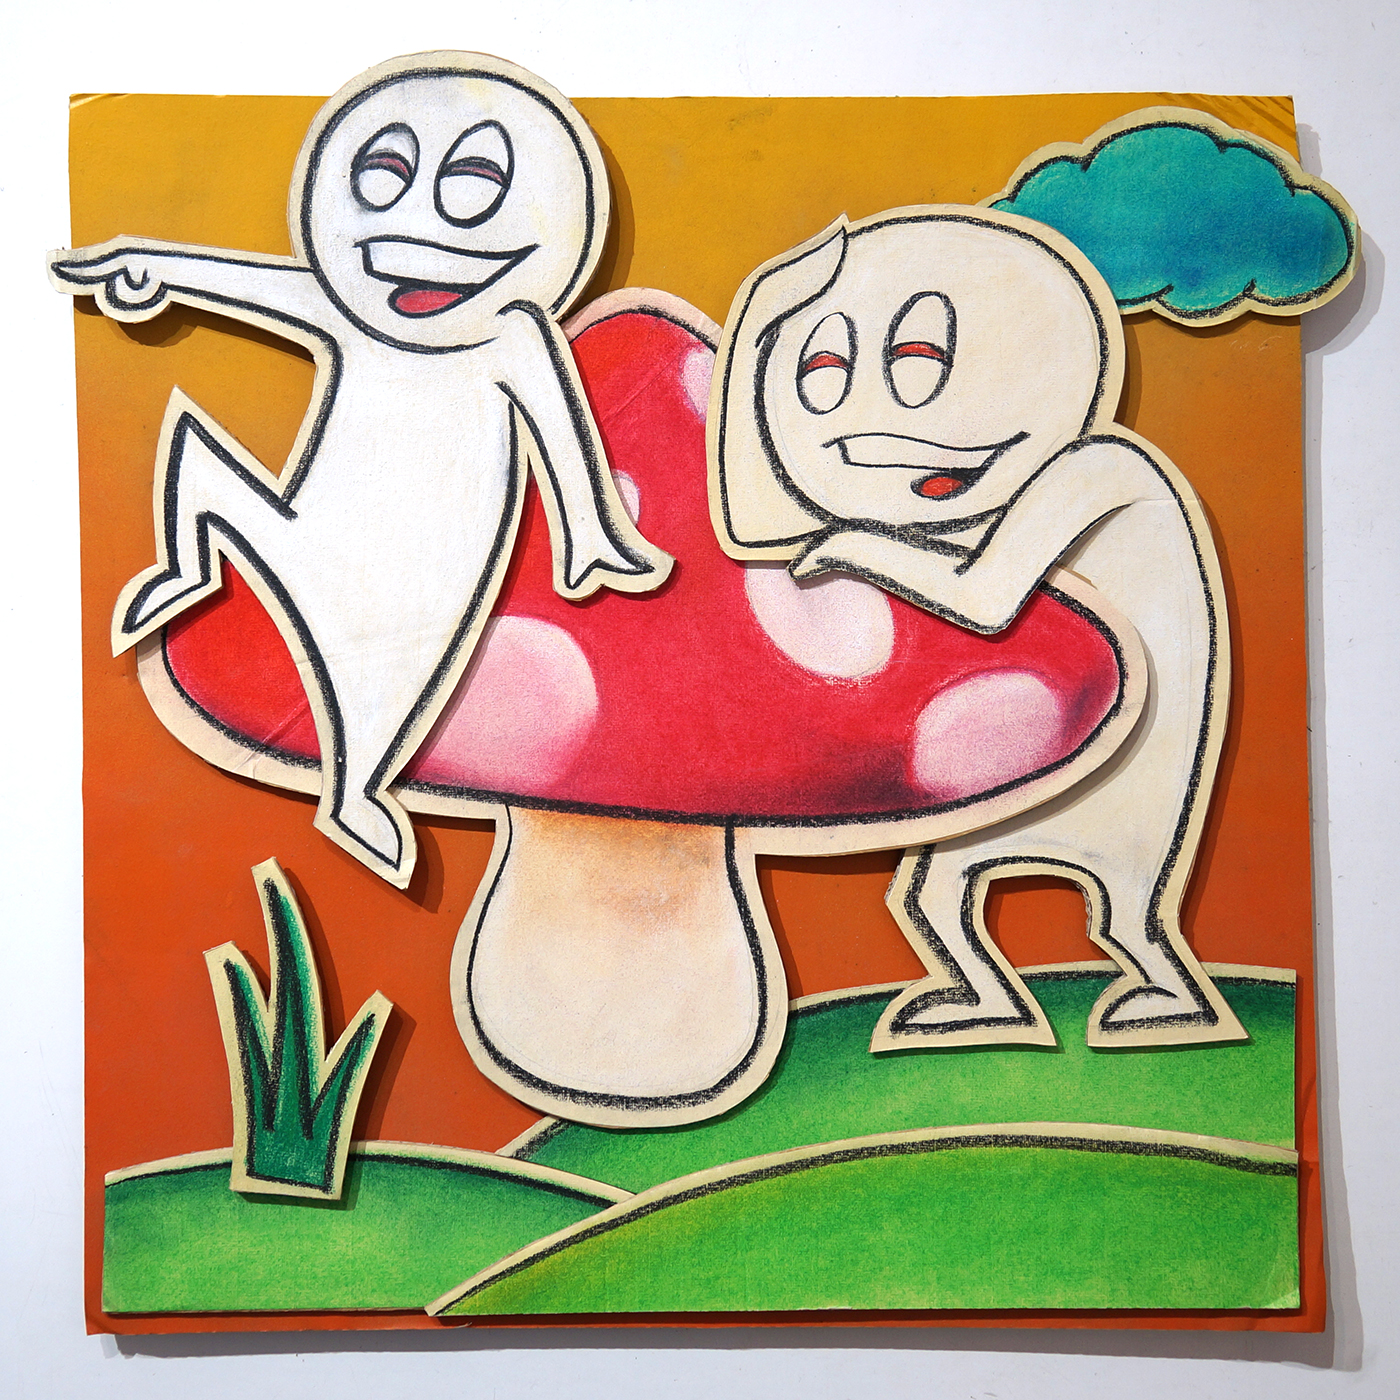 Mein lieber Prost: Mushroom -  Art - StreetArt - SALZIGBerlin 